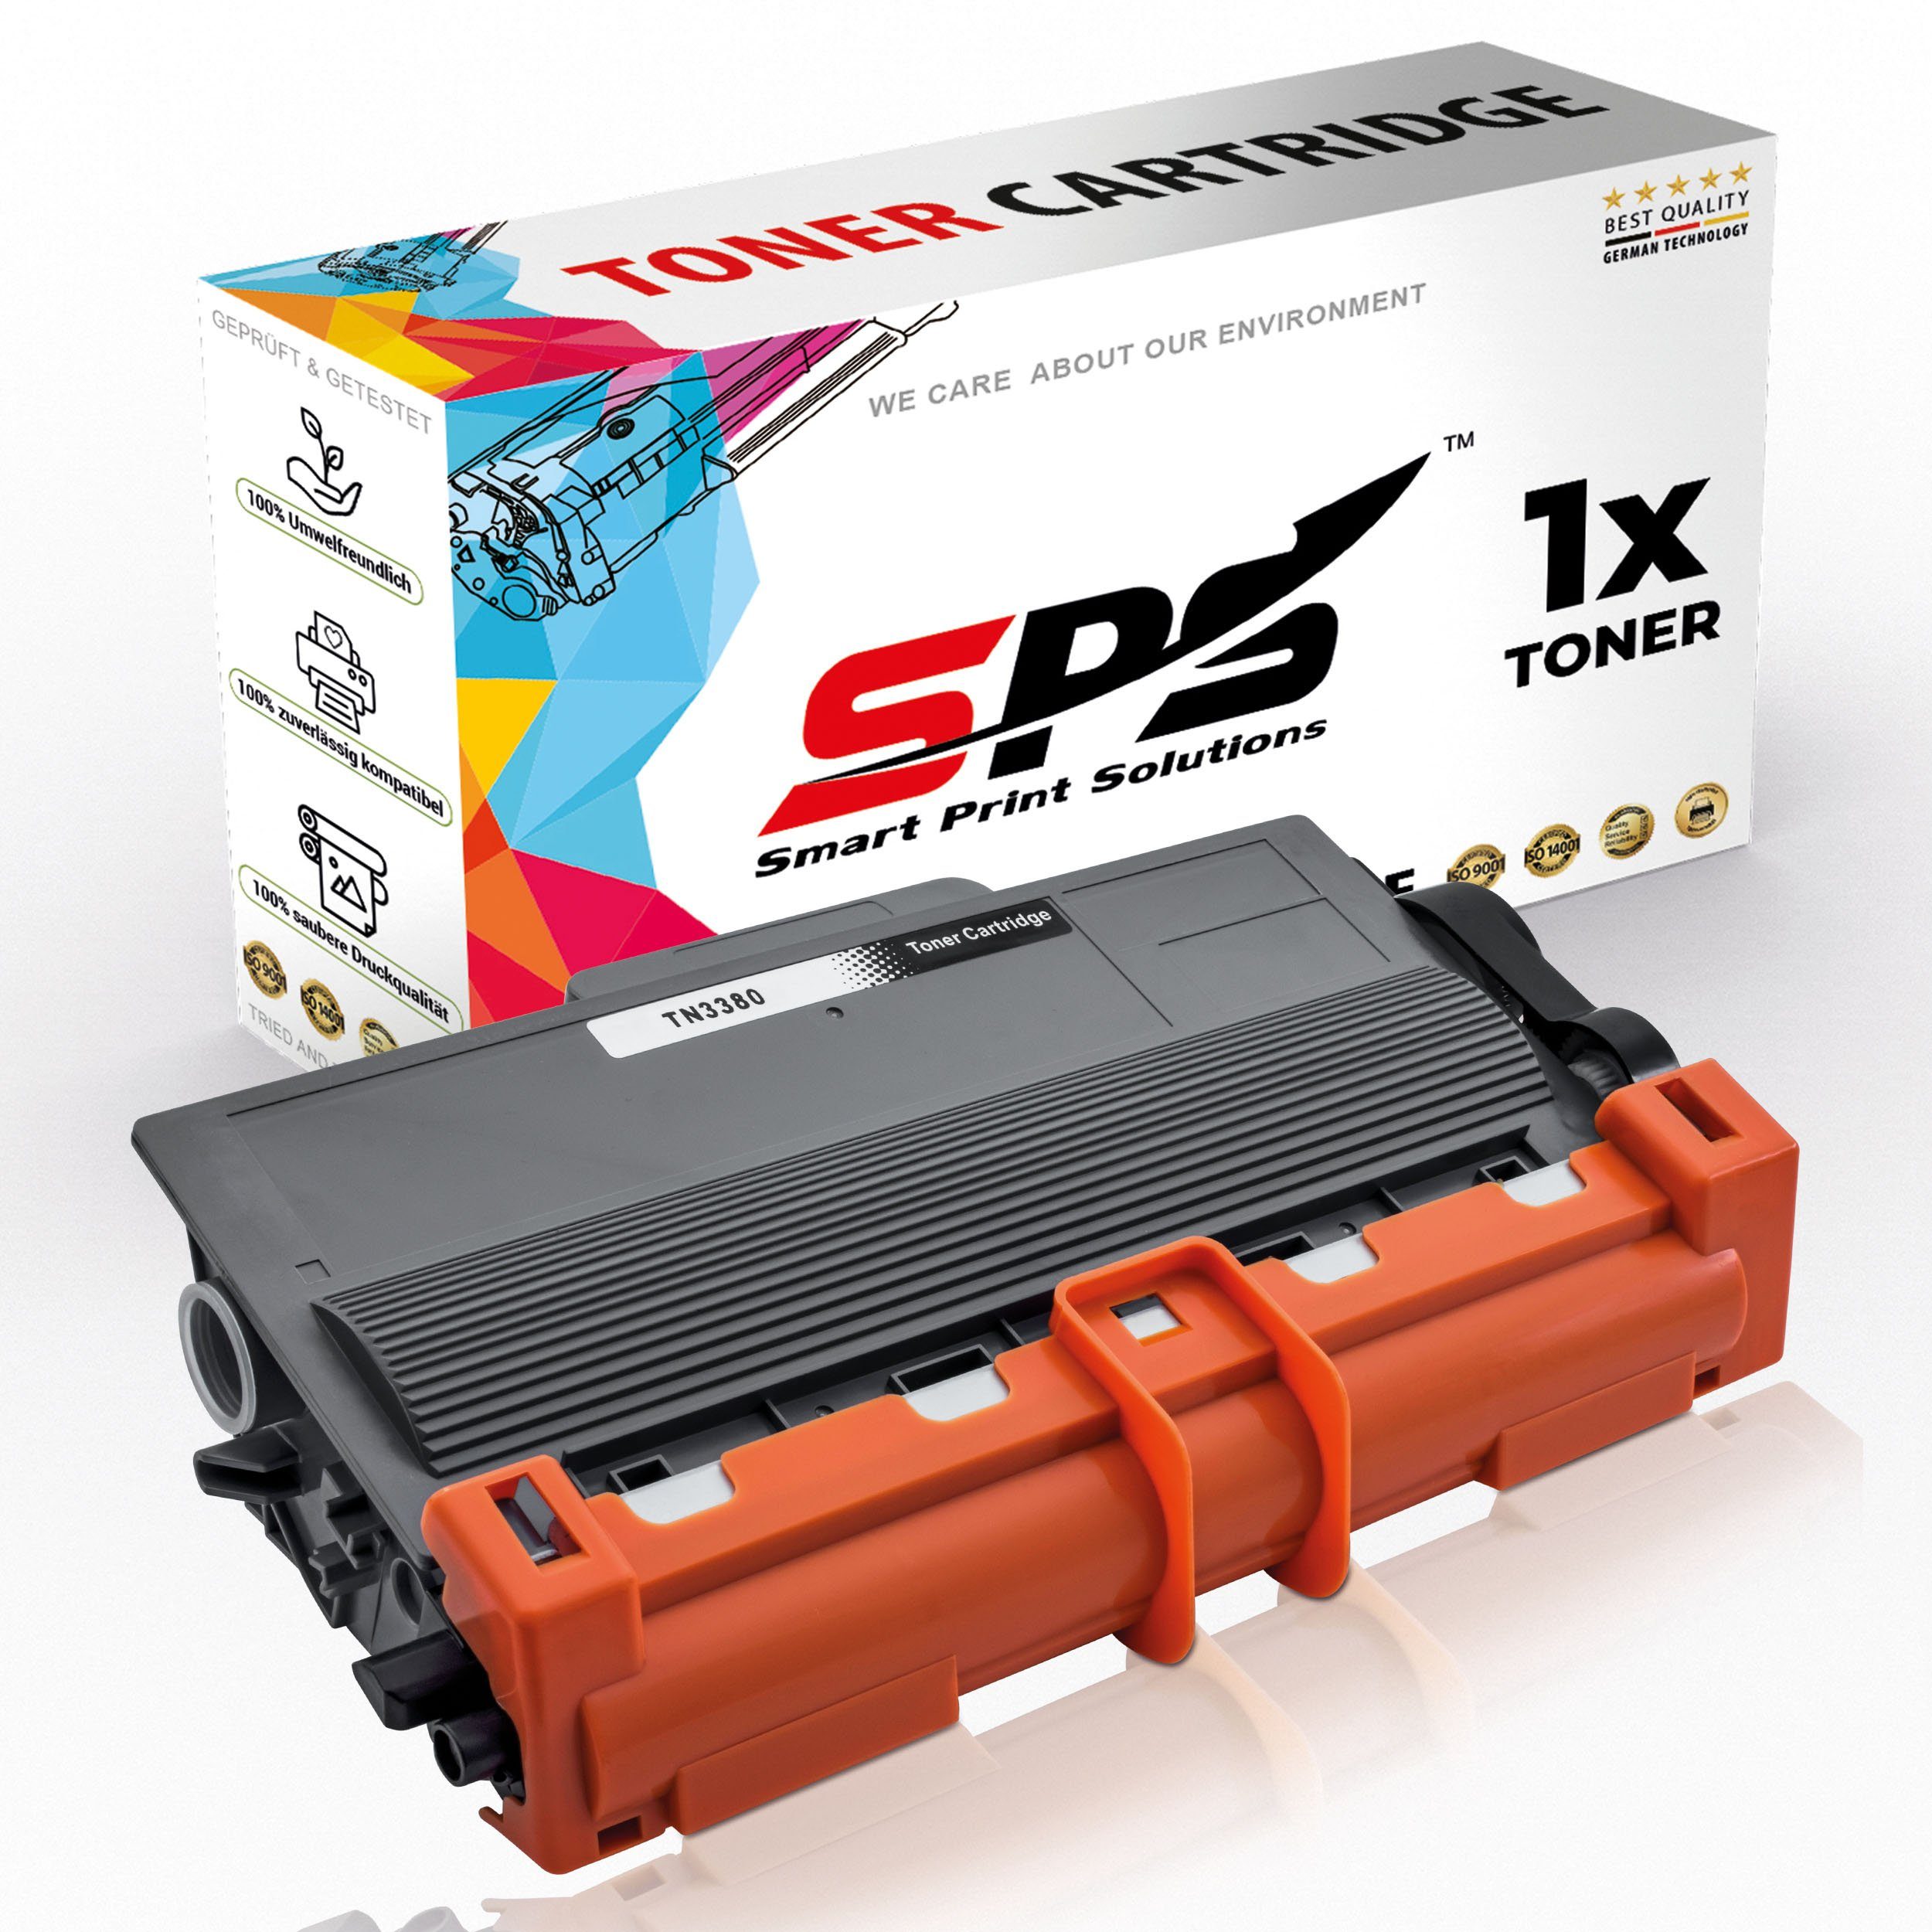 SPS Tonerkartusche HL-5470 (1er TN-3380, für Brother Pack) Kompatibel